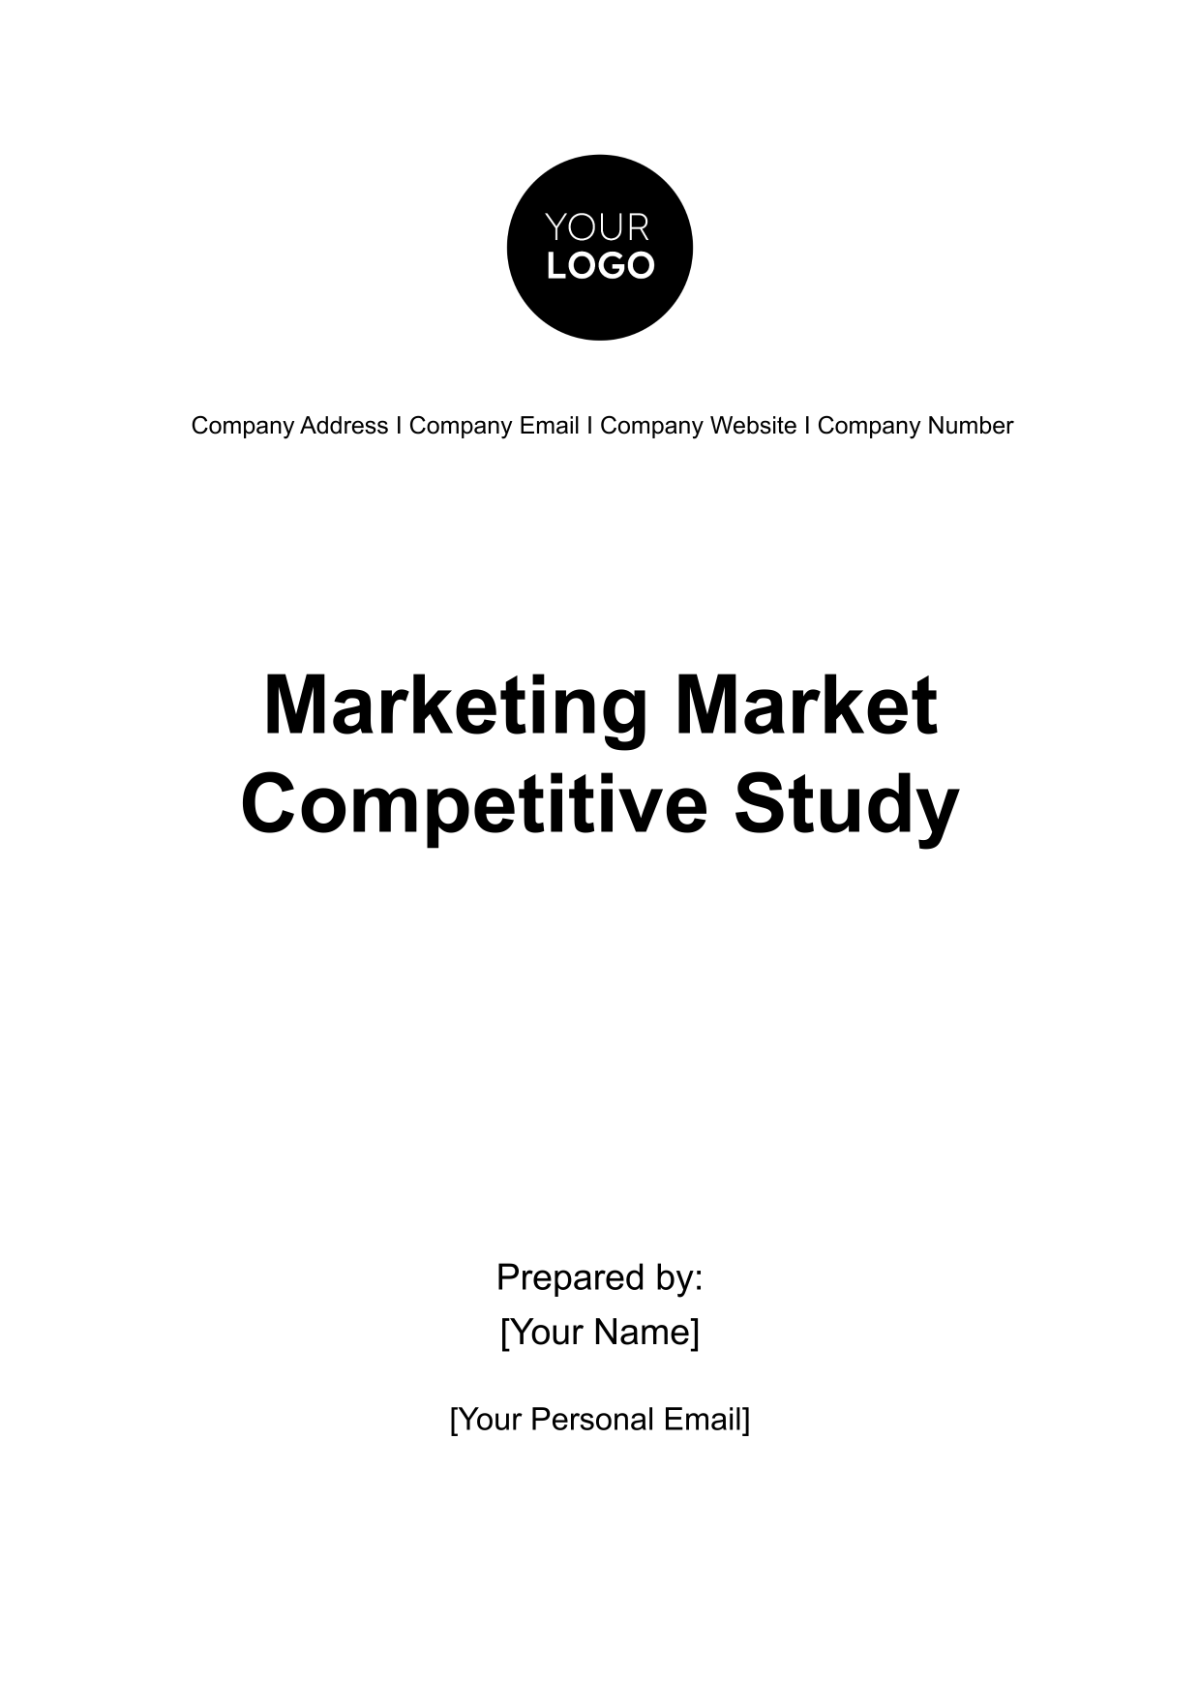 Marketing Market Competitiveness Study Template